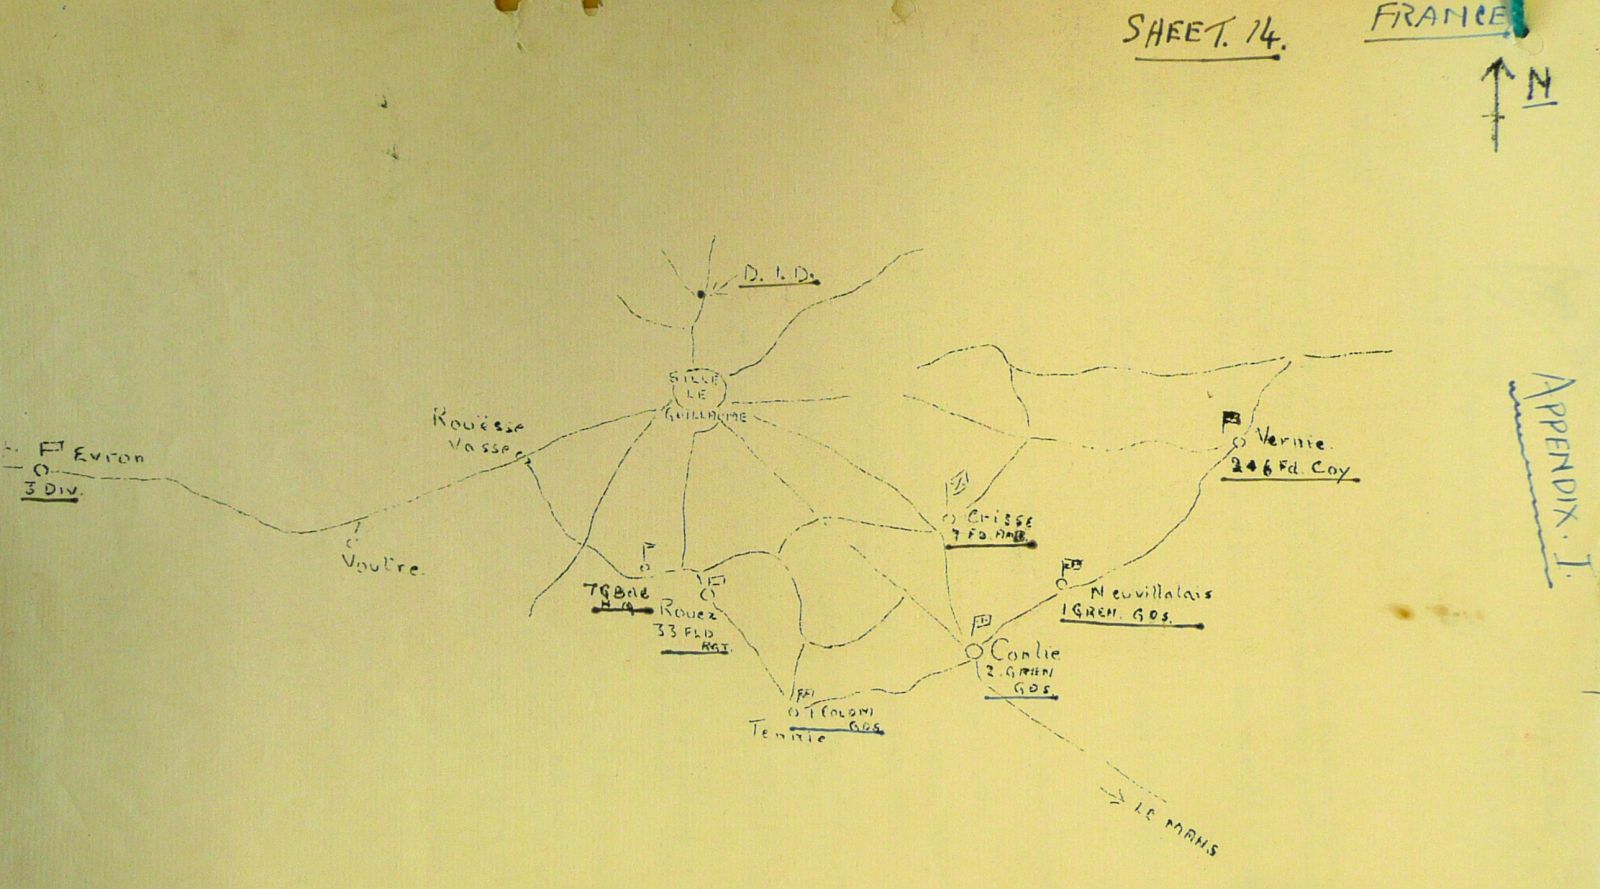 October 1939 War Diary, 7 Guards Brigade, Headquarters